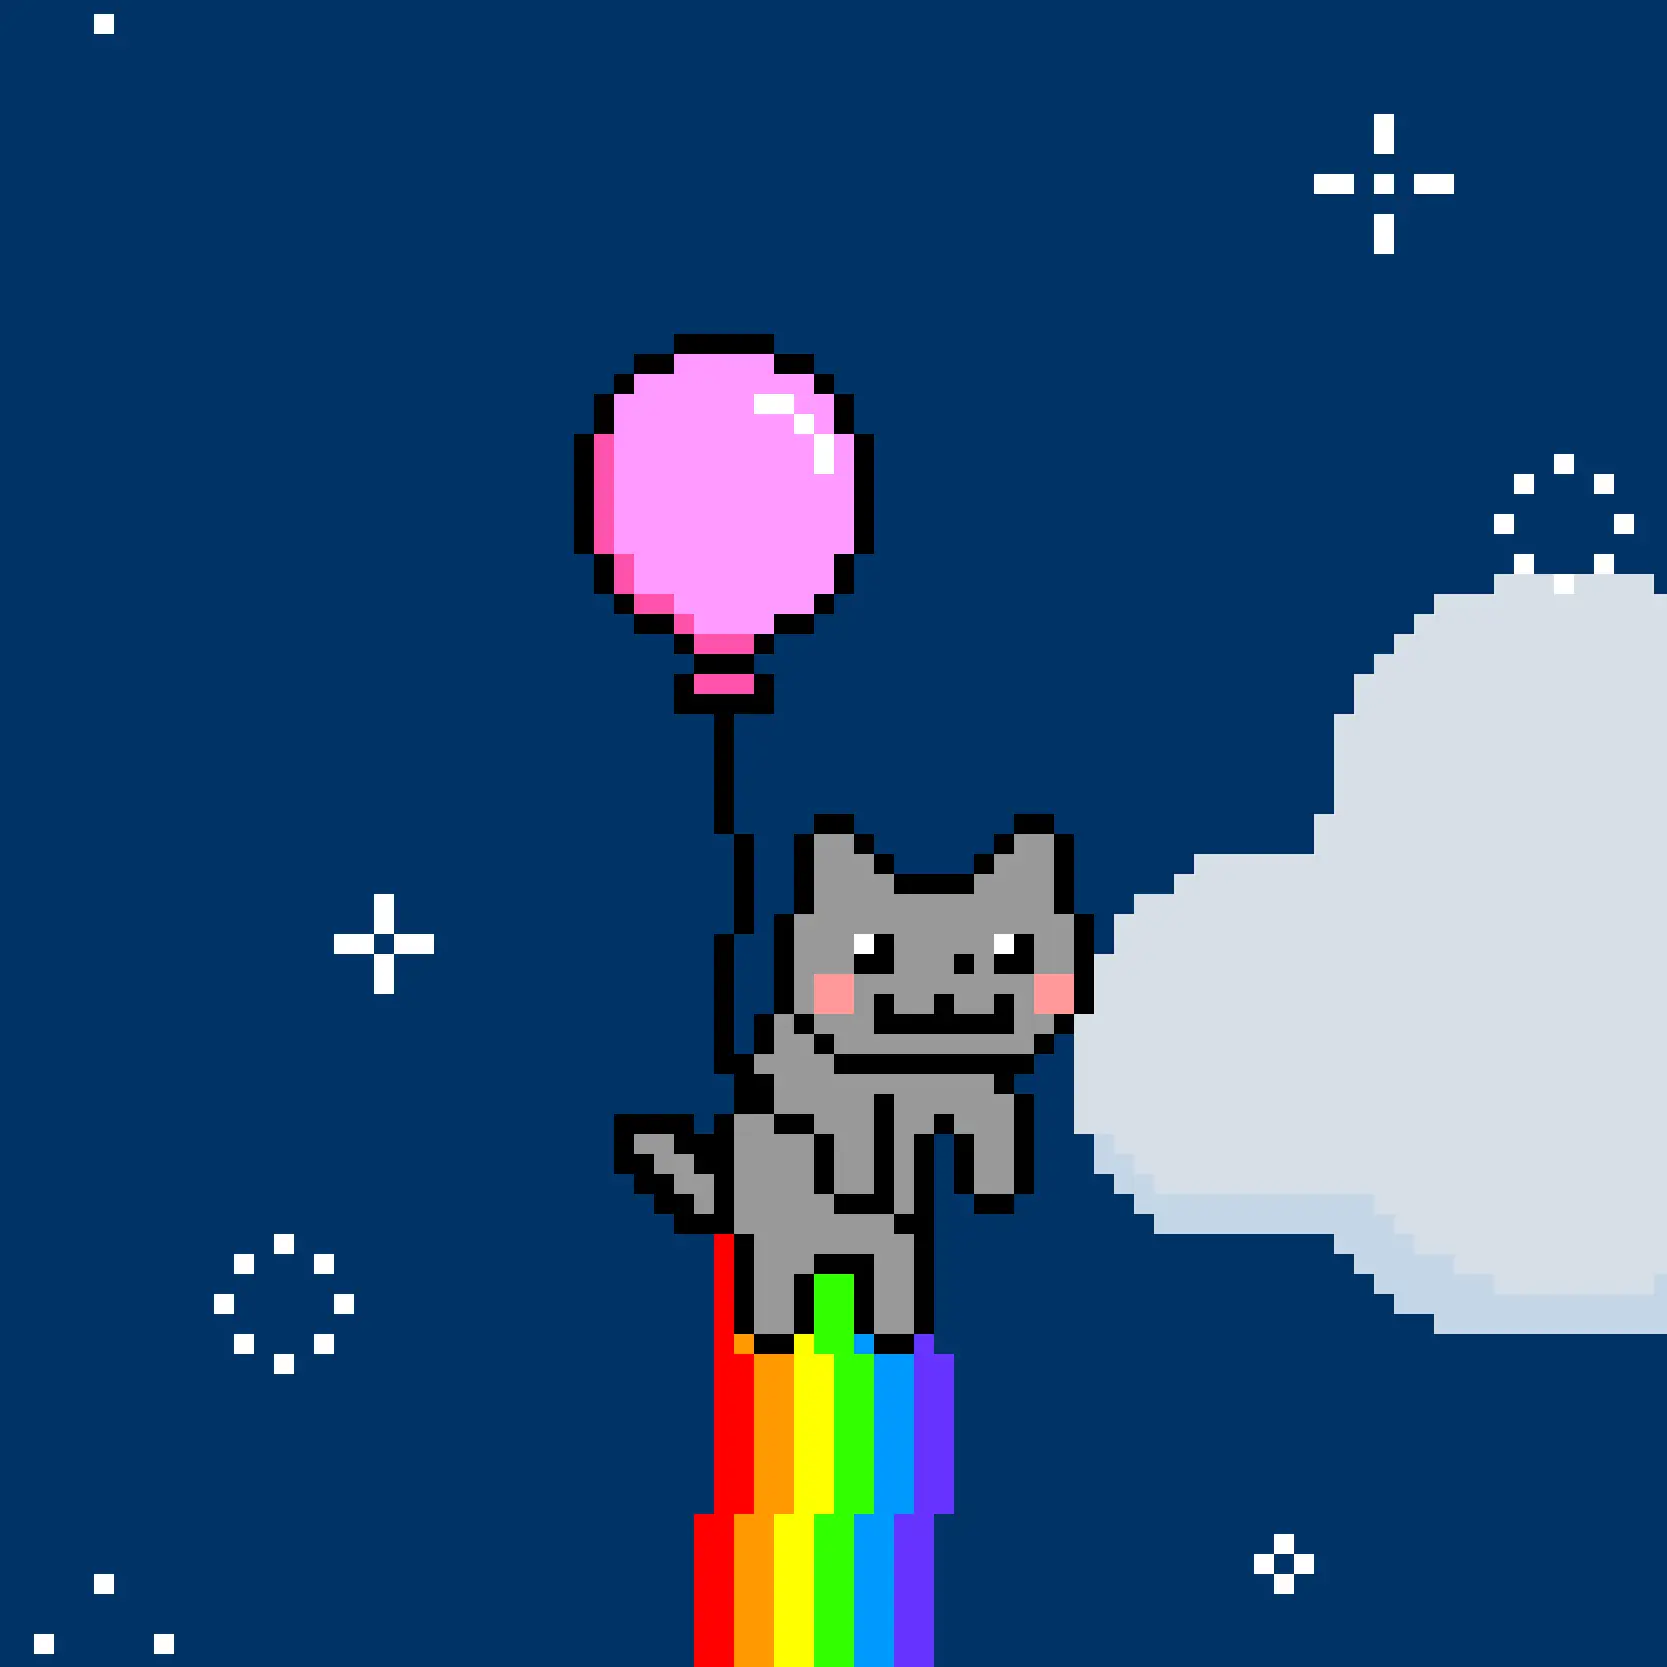 Animated Gif,Cartoon Cat Gif,Flying Cat Gif,Japanese Gif,Nyan Cat Gif,Rainbow Gif,YouTube Video Gif